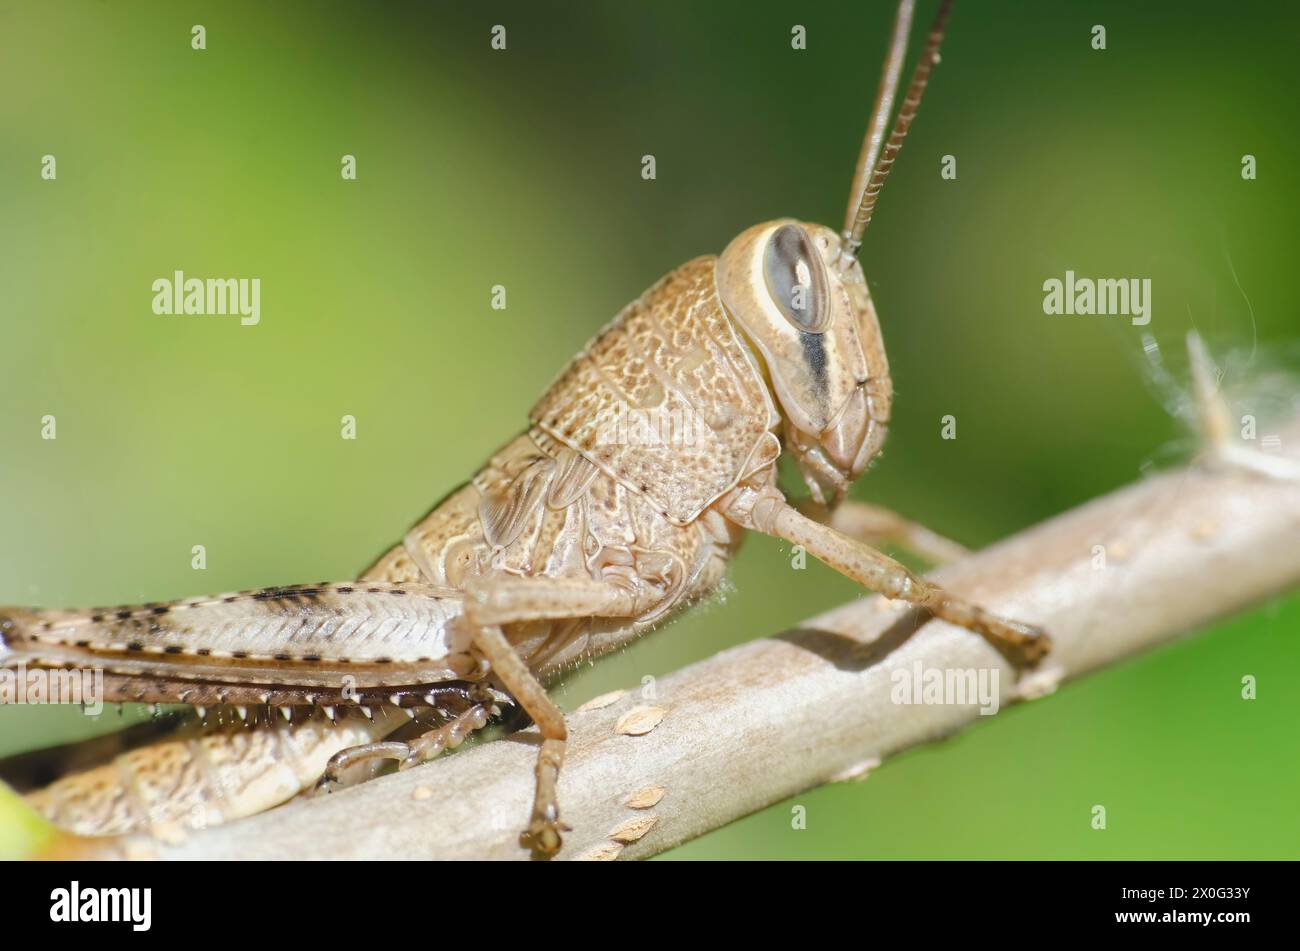 Brown grasshopper posed against green bokeh background Stock Photo